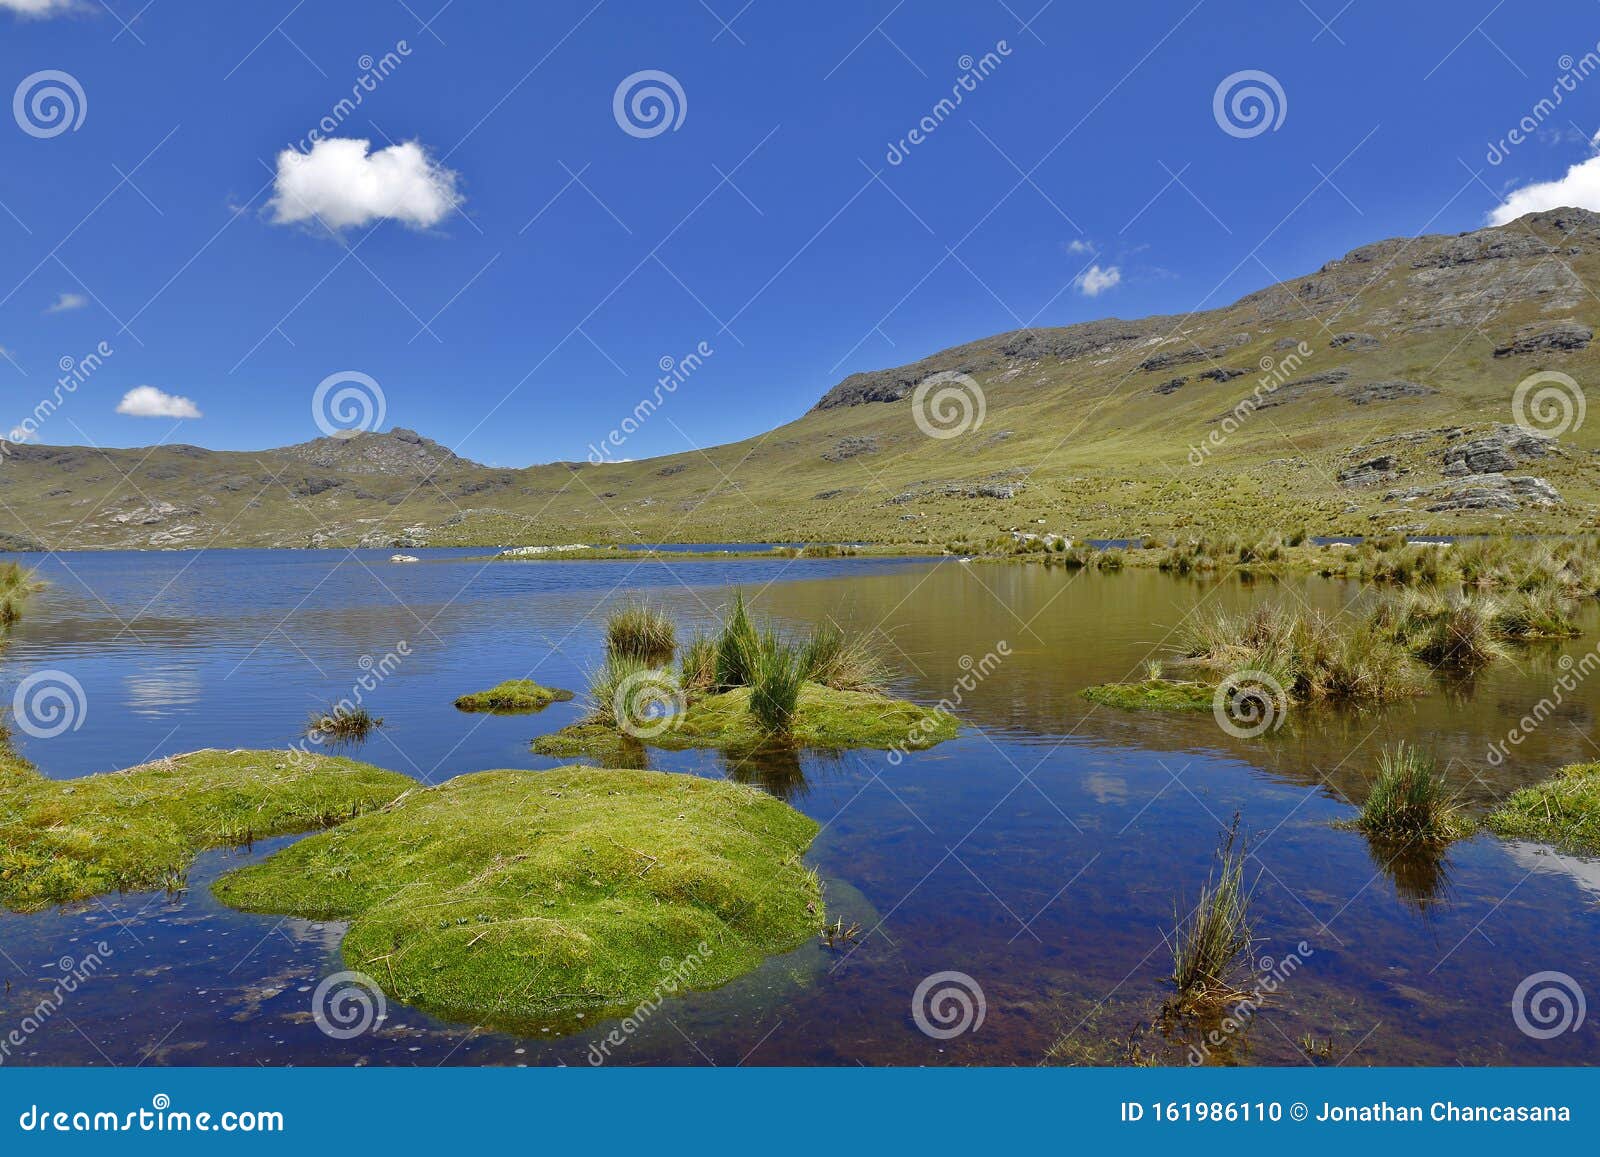 lago andino with mountains